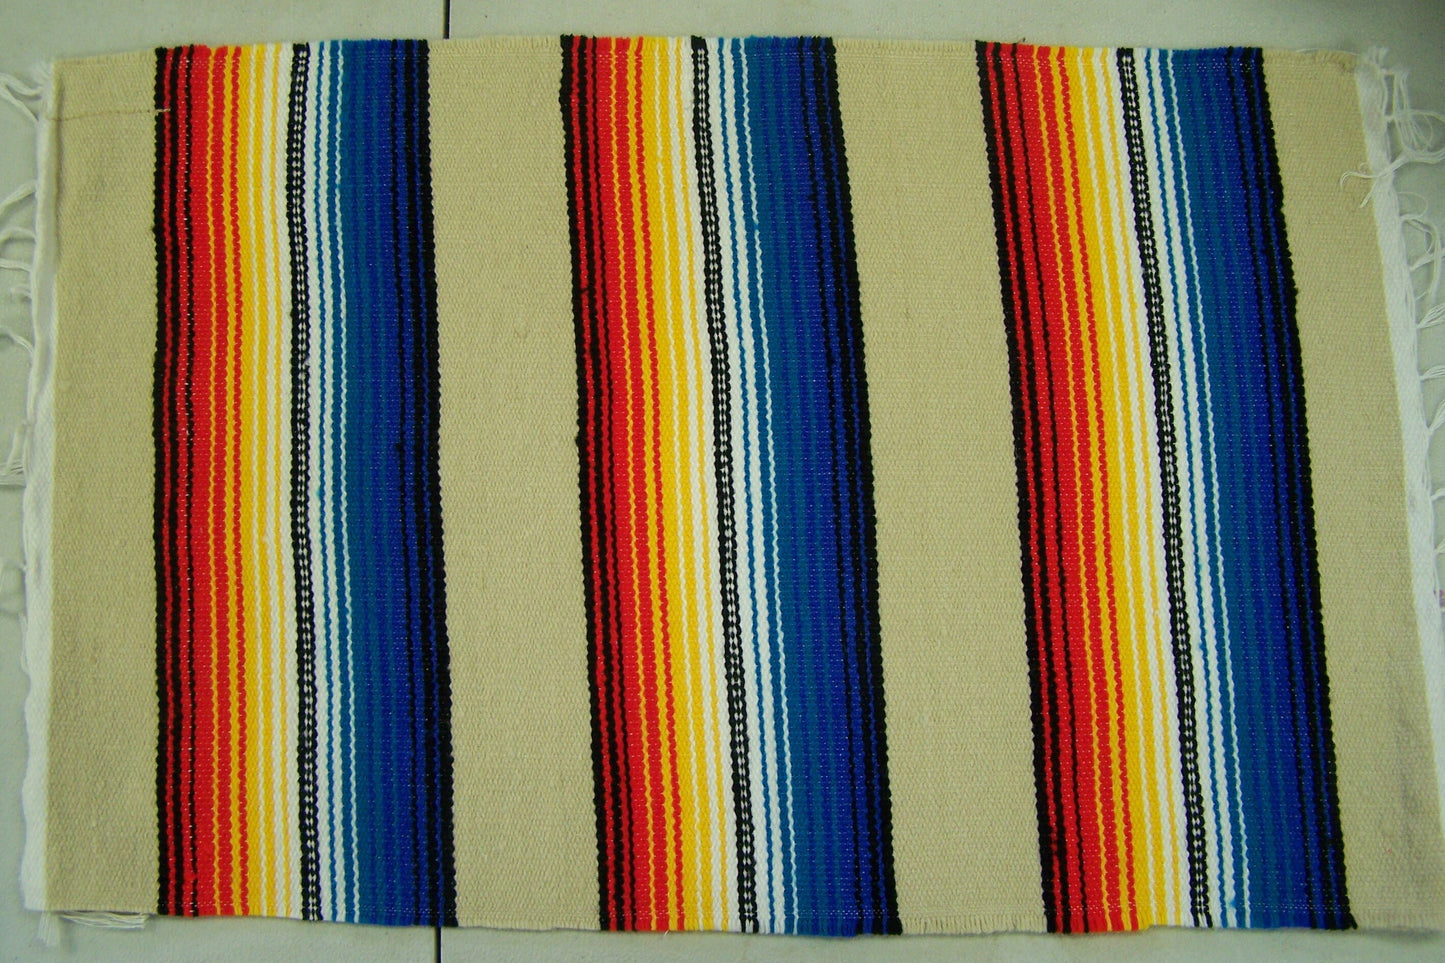 4 Serape/Sarape Placemats - Light Beige, Multicolored